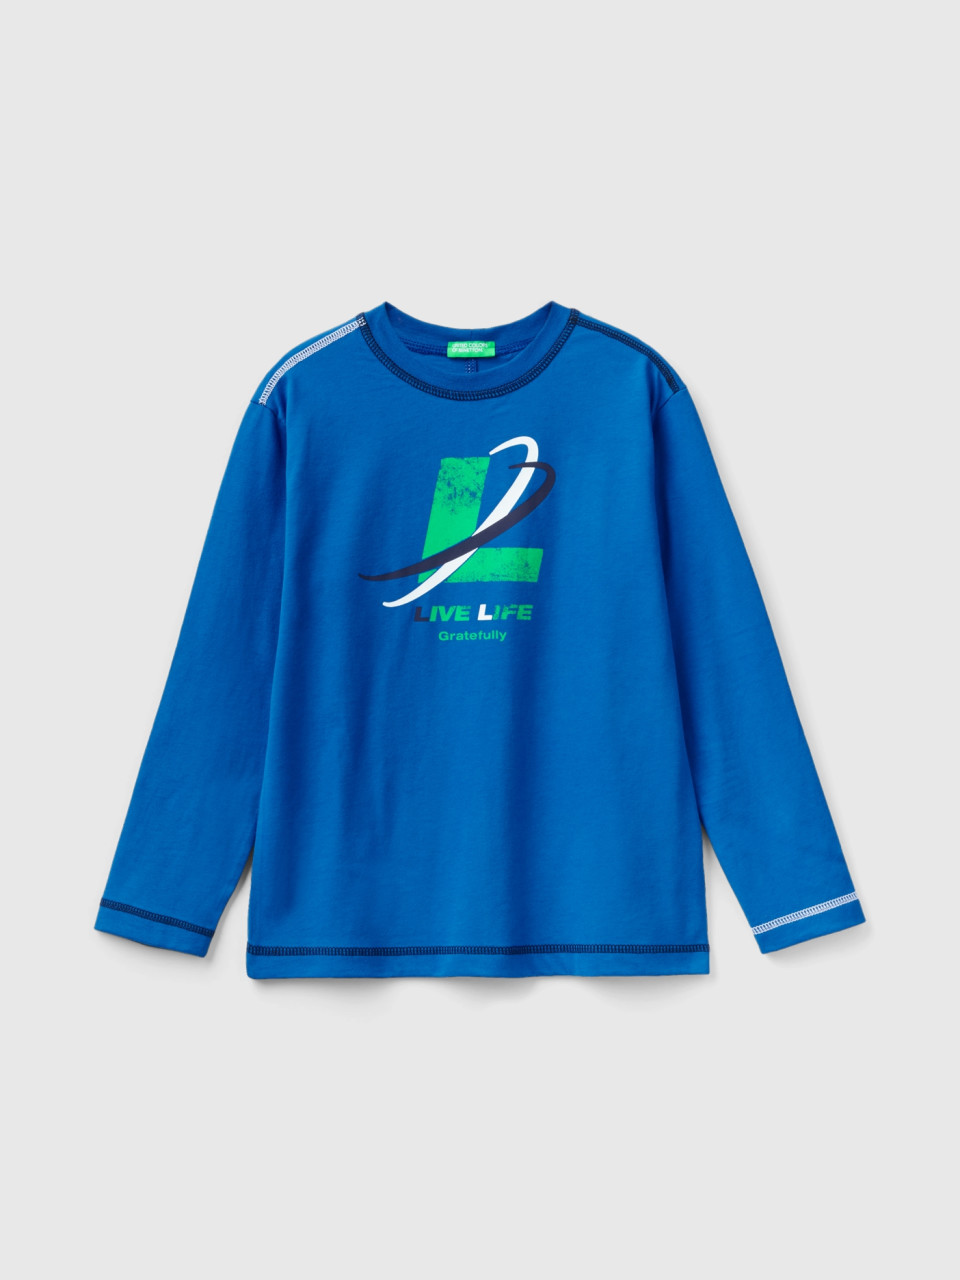 Benetton, T-shirt With Slogan Print, Bright Blue, Kids